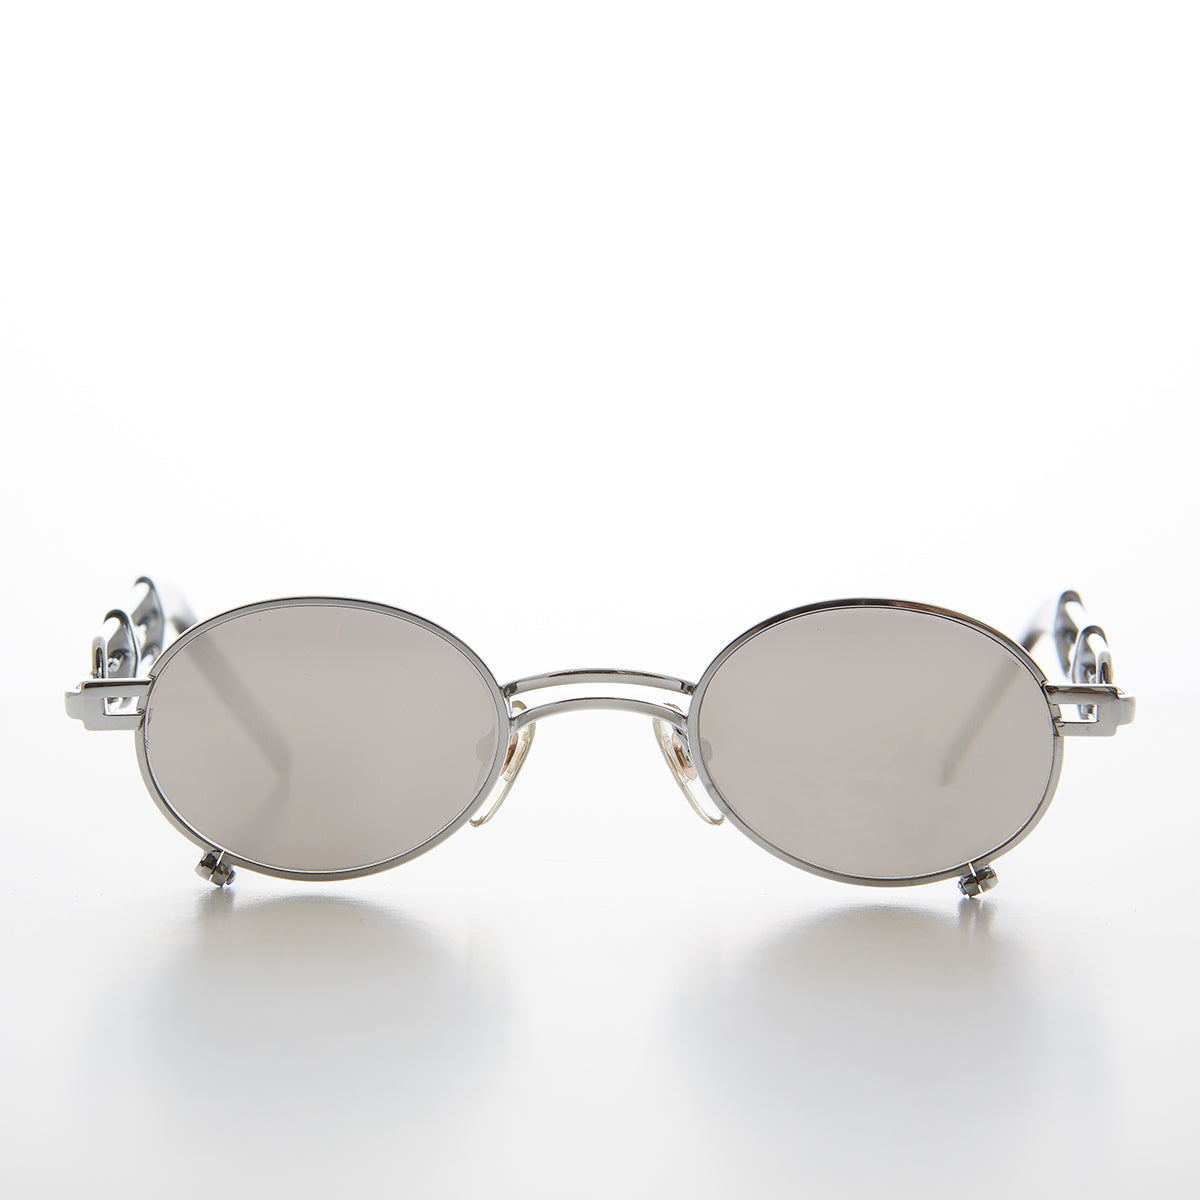 Small Oval Steampunk Vintage Sunglasses